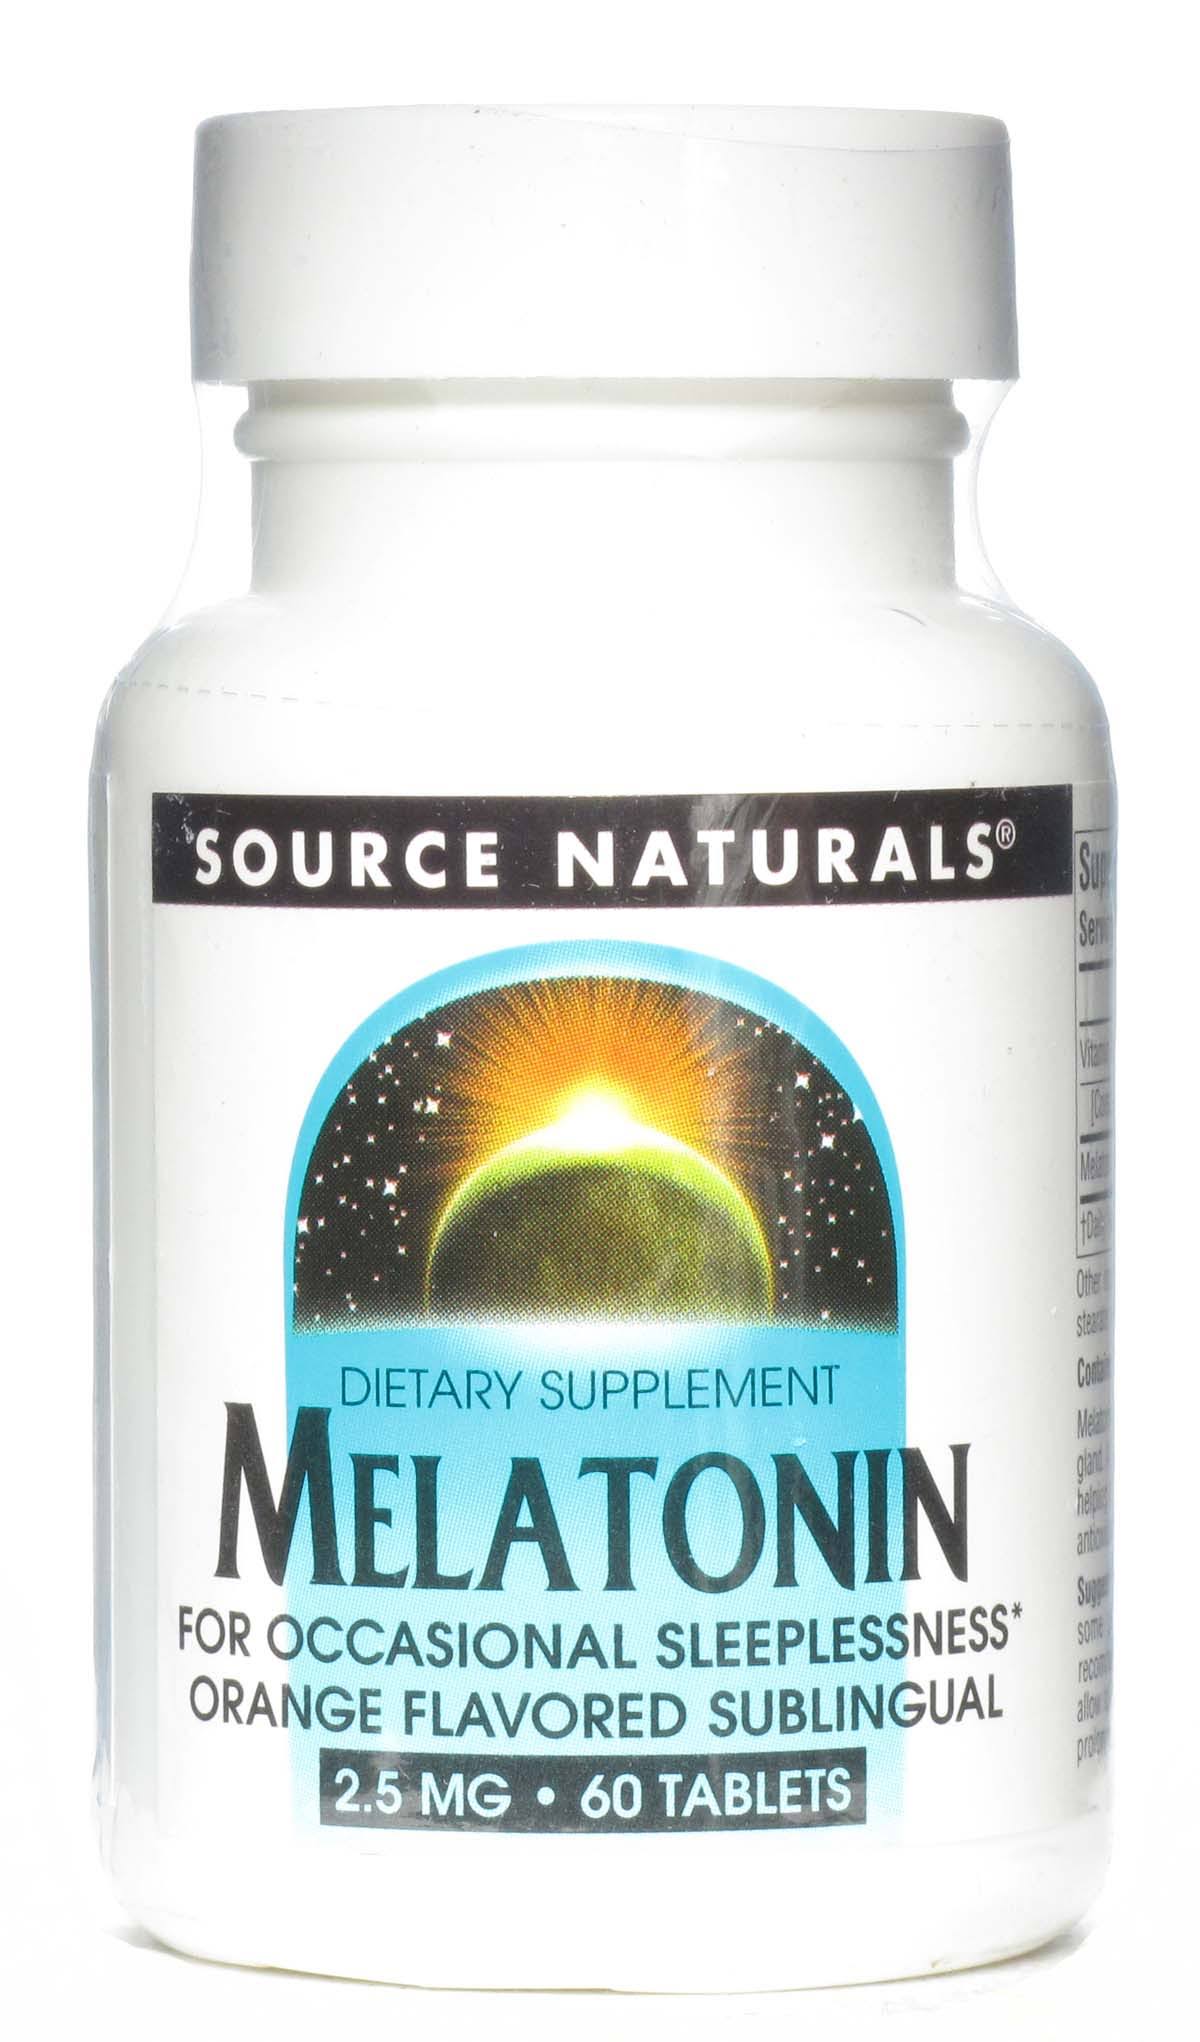 Source Naturals Melatonin Dietary Supplement - 2.5mg, 60 Pack